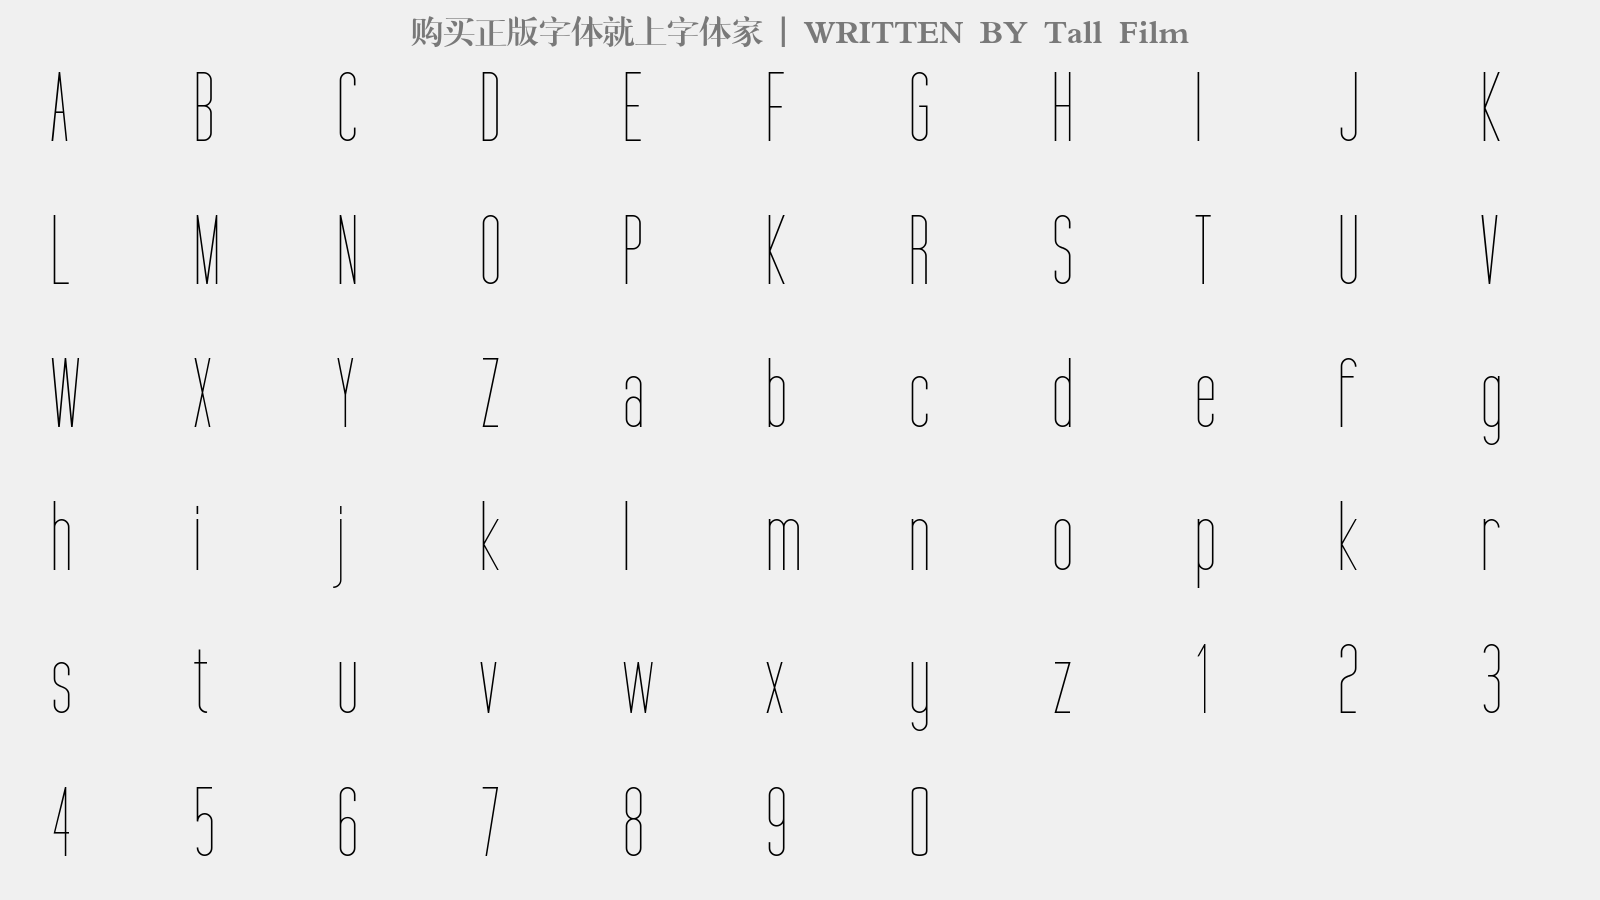 Tall Film - 大写字母/小写字母/数字